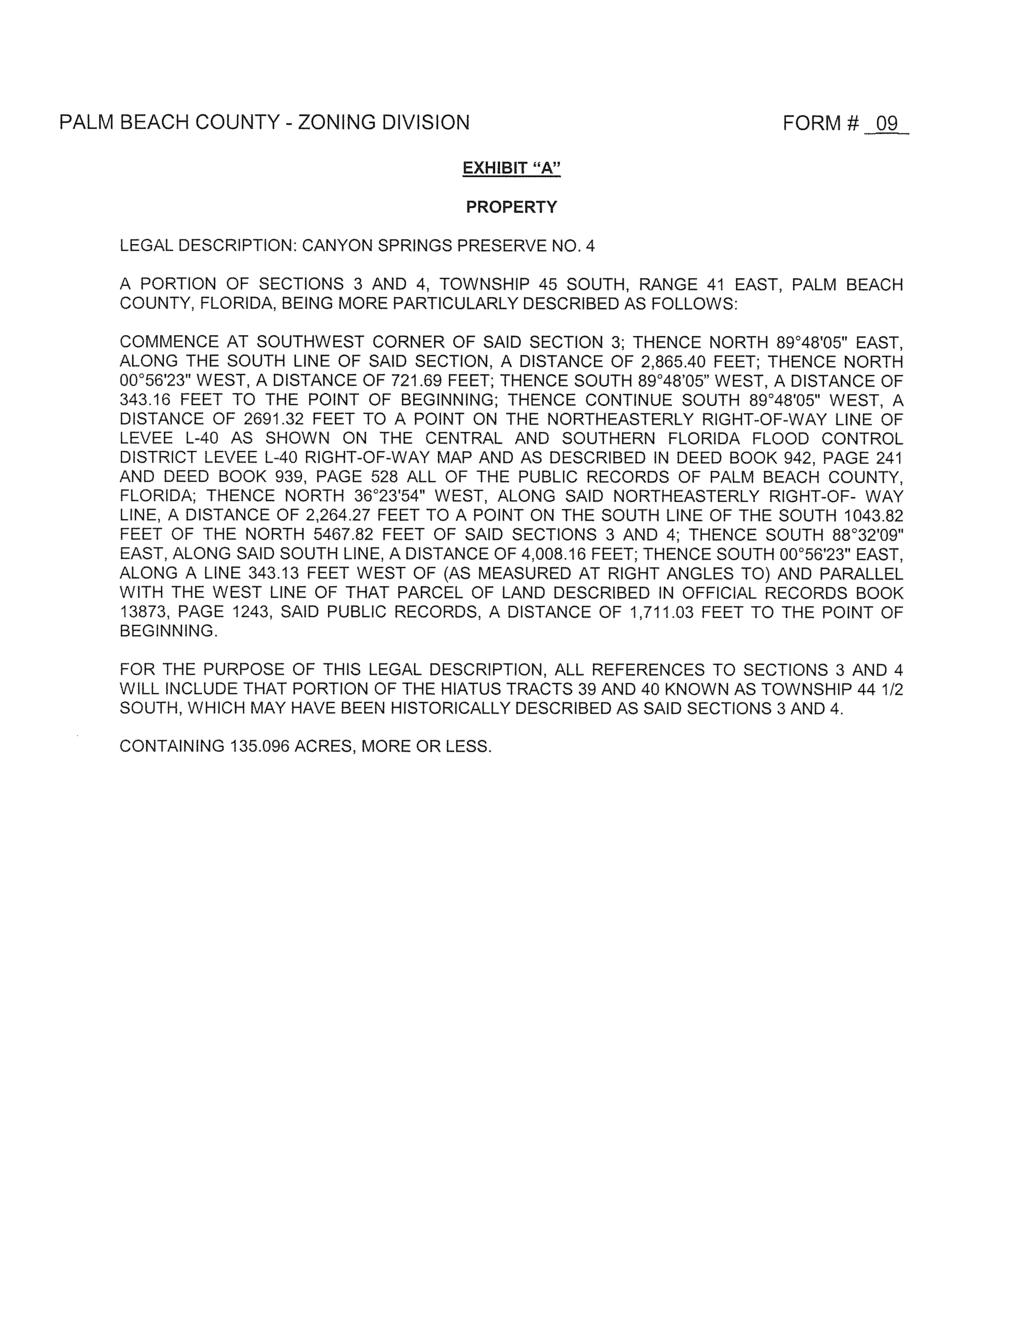 ZC July 5, 2012 Page 320 Application